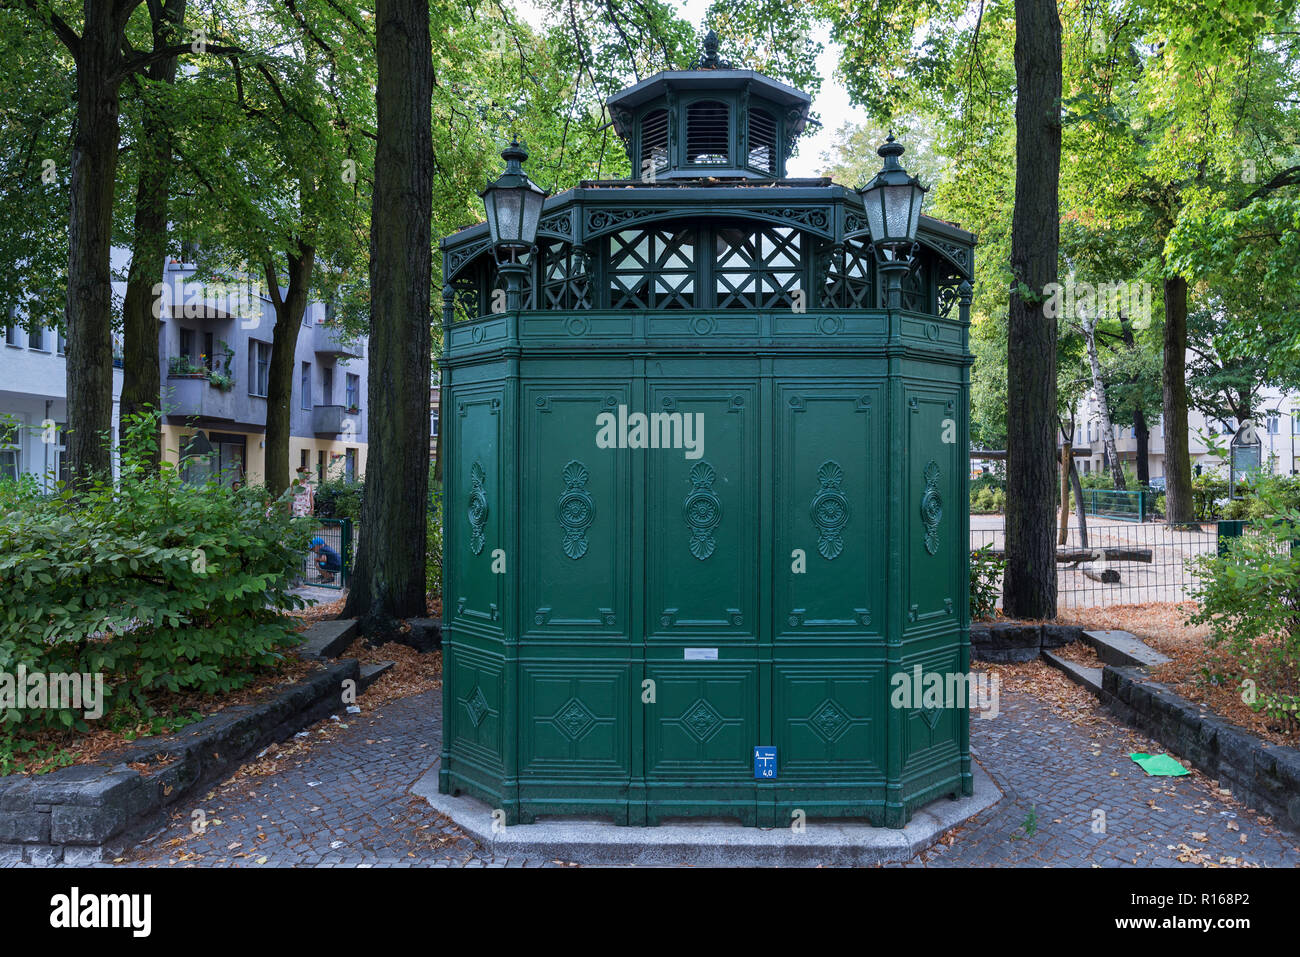 Public toilet, Berlin, Germany Stock Photo - Alamy